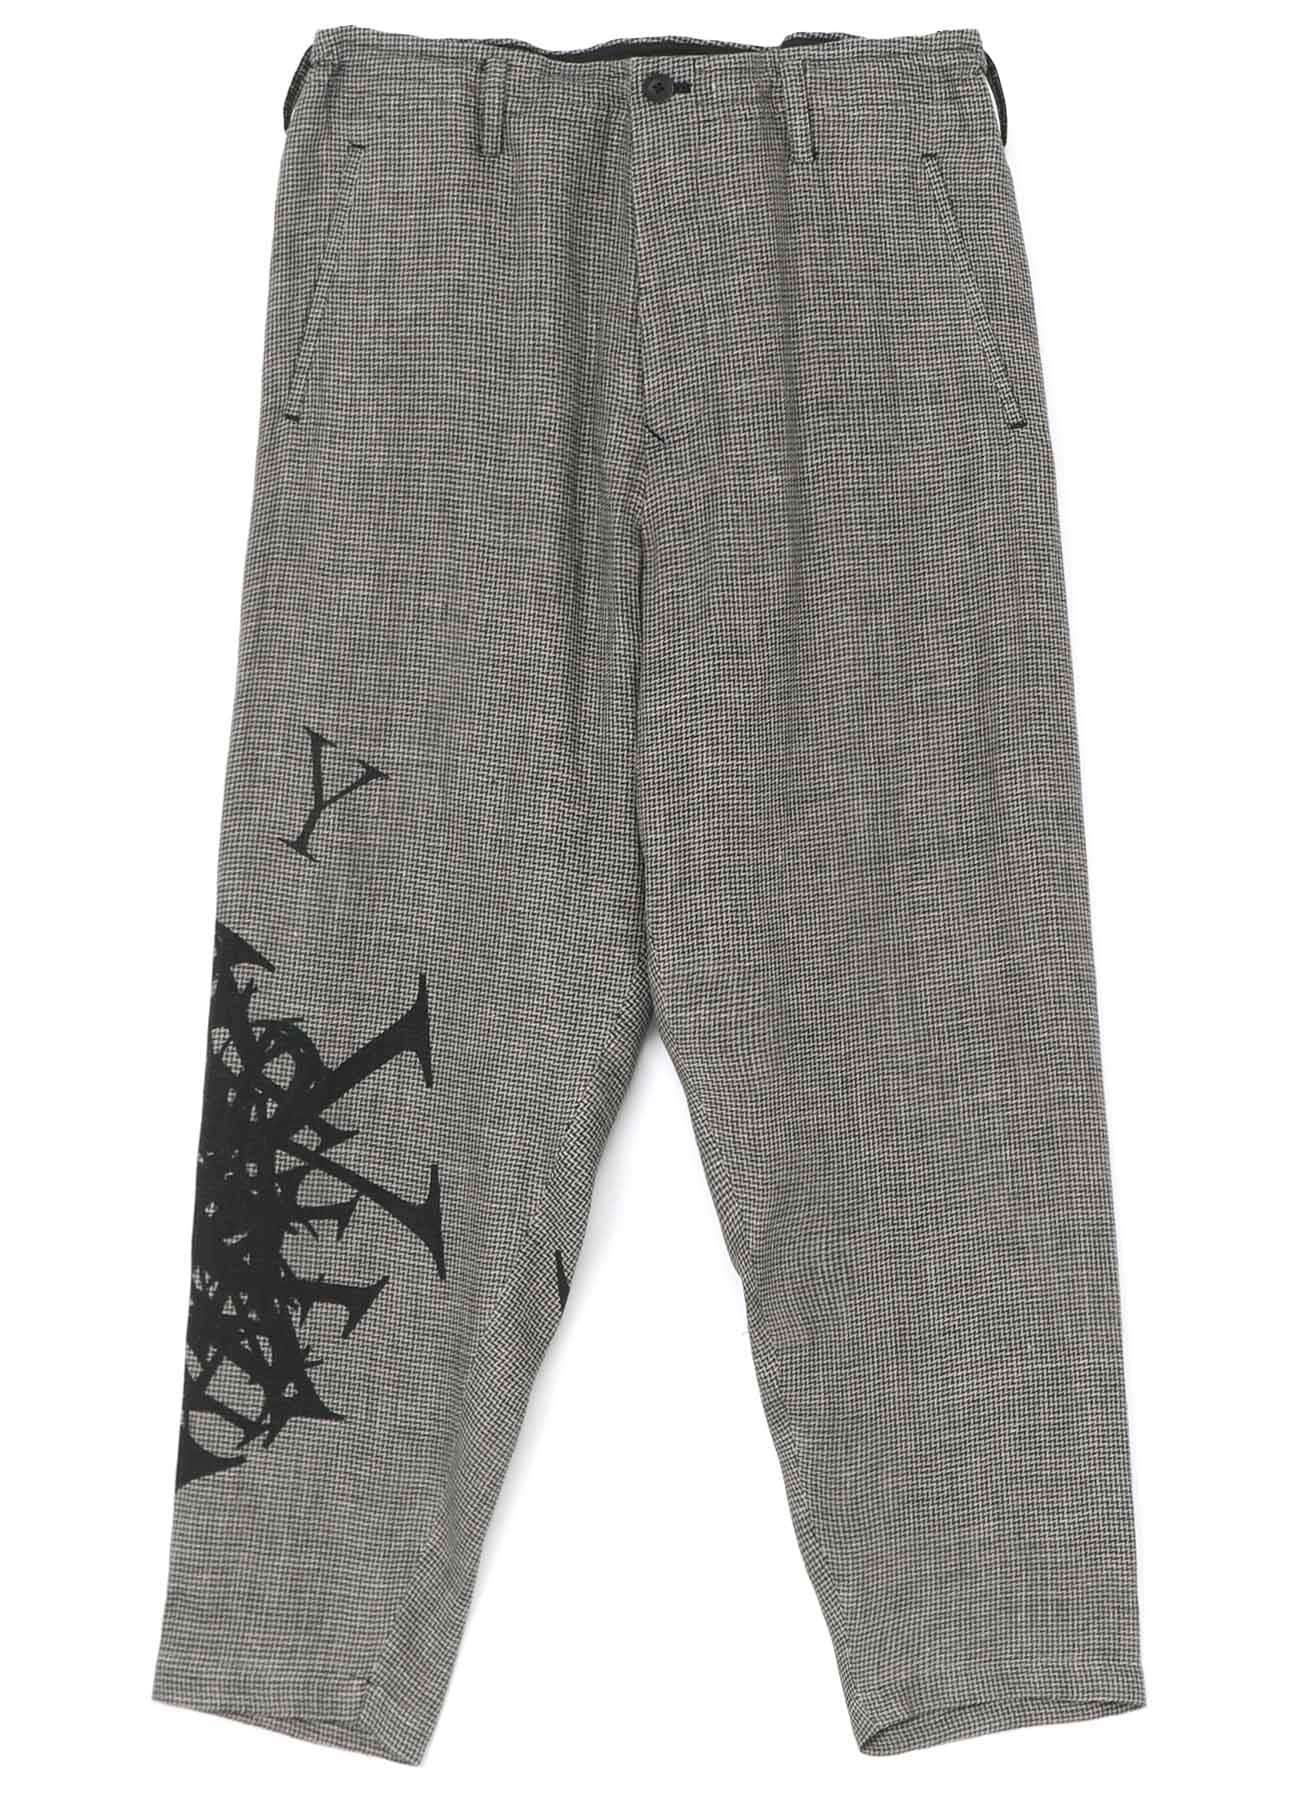 HOUNDSTOOTH PRINT PANTS(S Grey): Yohji Yamamoto POUR HOMME｜THE 